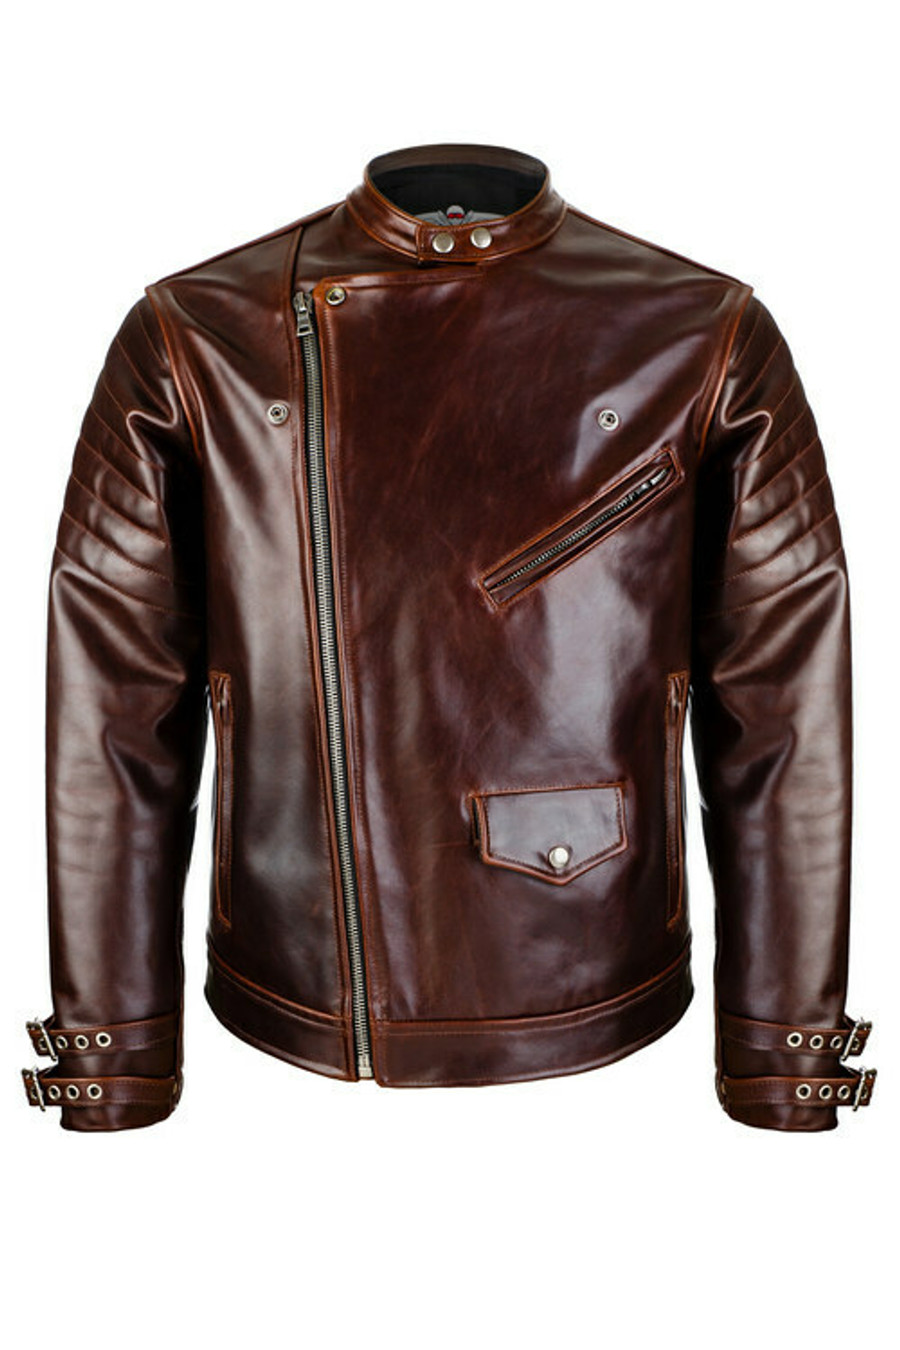 the vktre moto co vktre 1 motorcycle jacket